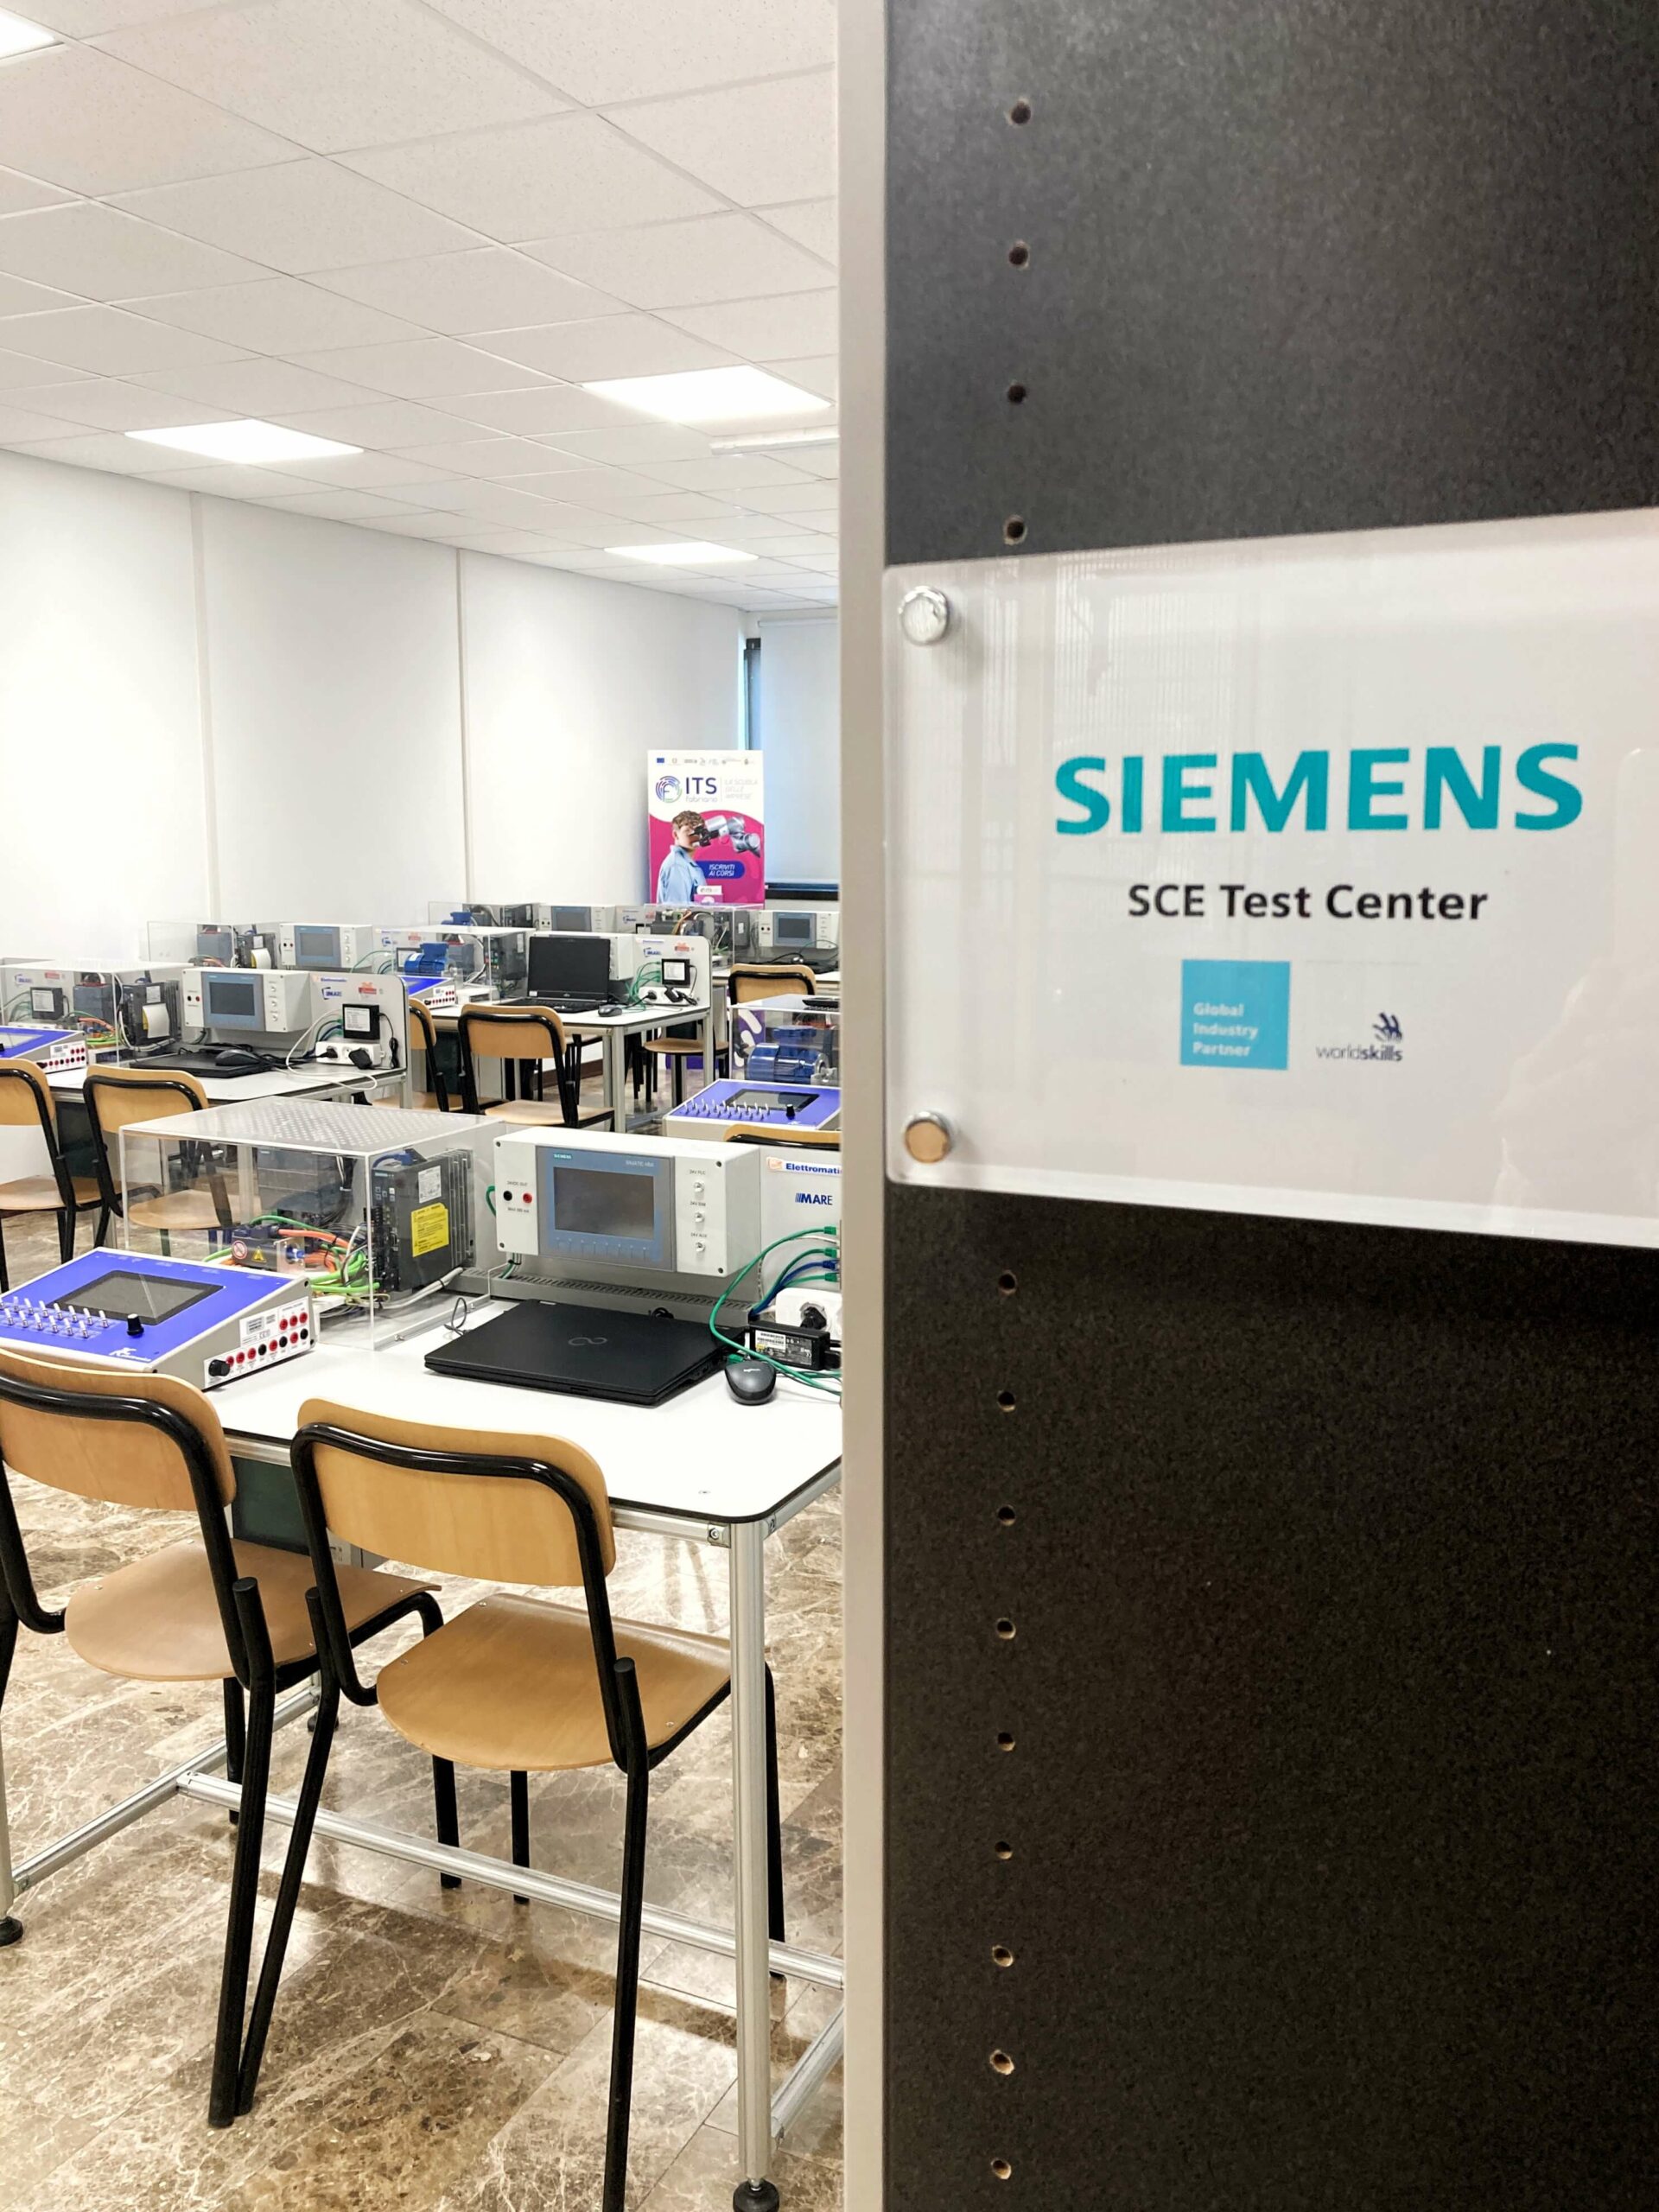 L’ITS Fabriano è Siemens SCE Test Center